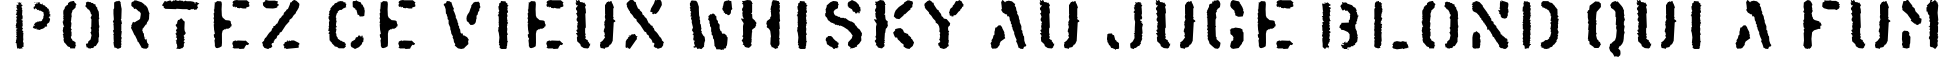 Пример написания шрифтом KartonC текста на французском